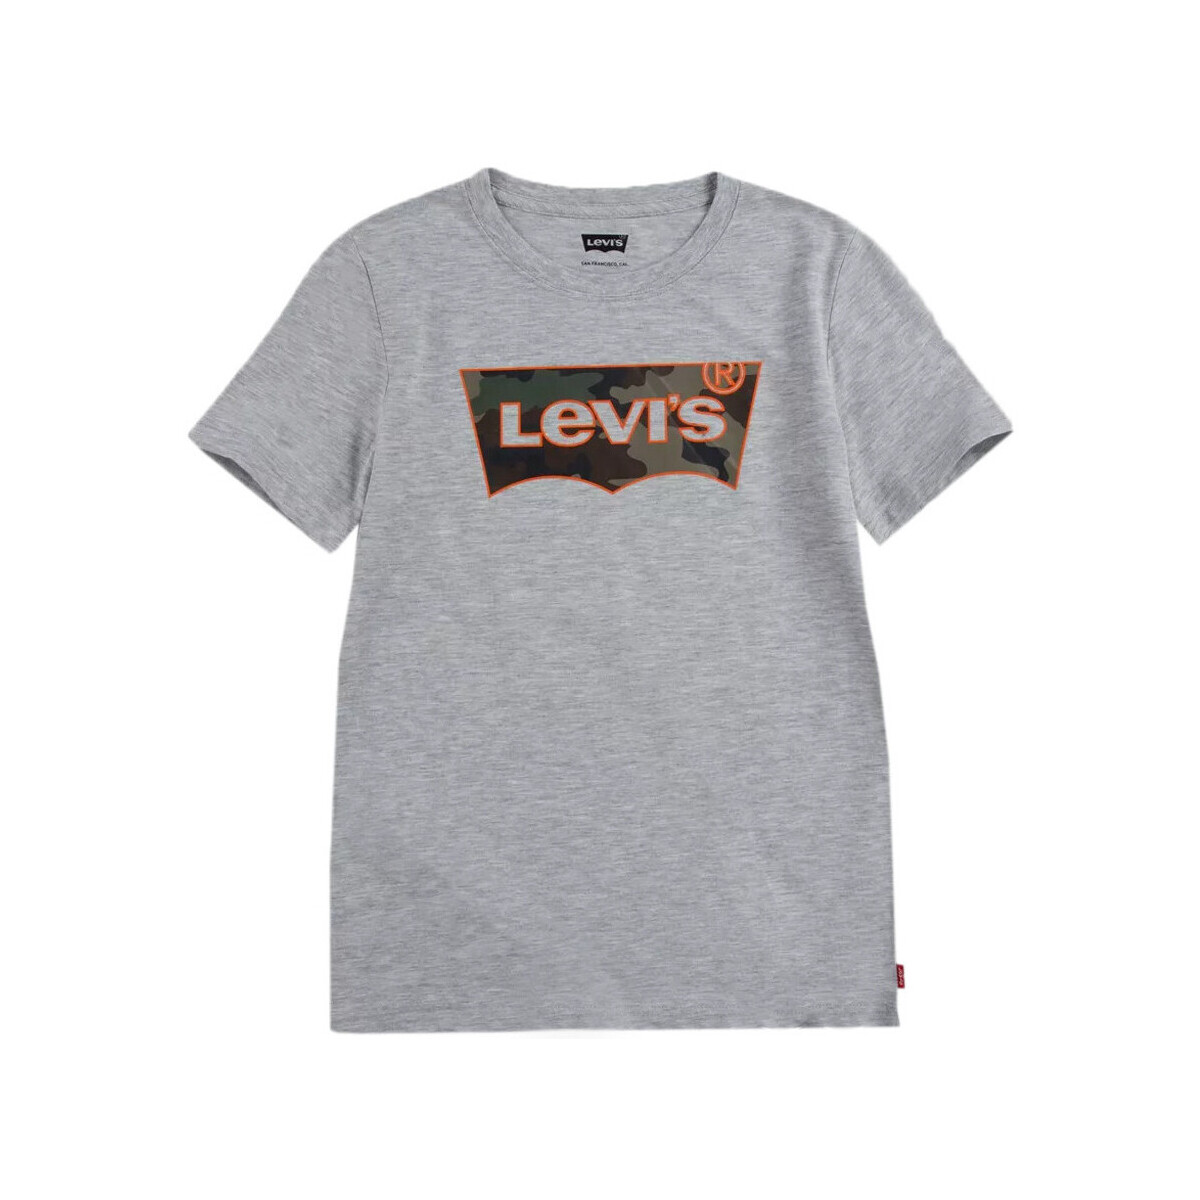 Textiel Jongens T-shirts & Polo’s Levi's  Grijs